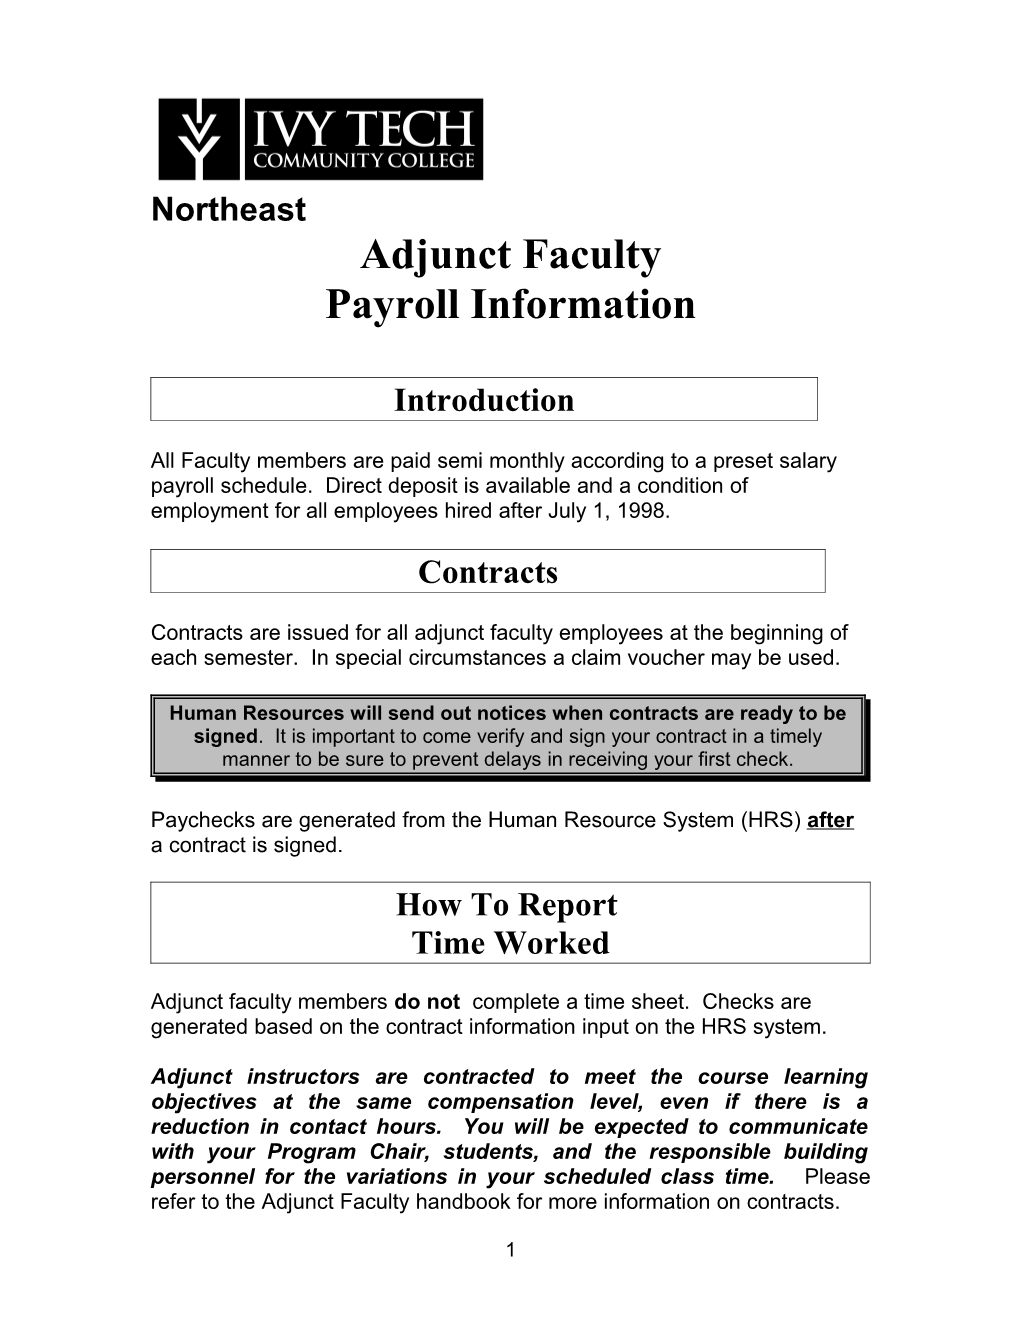 Payroll Information